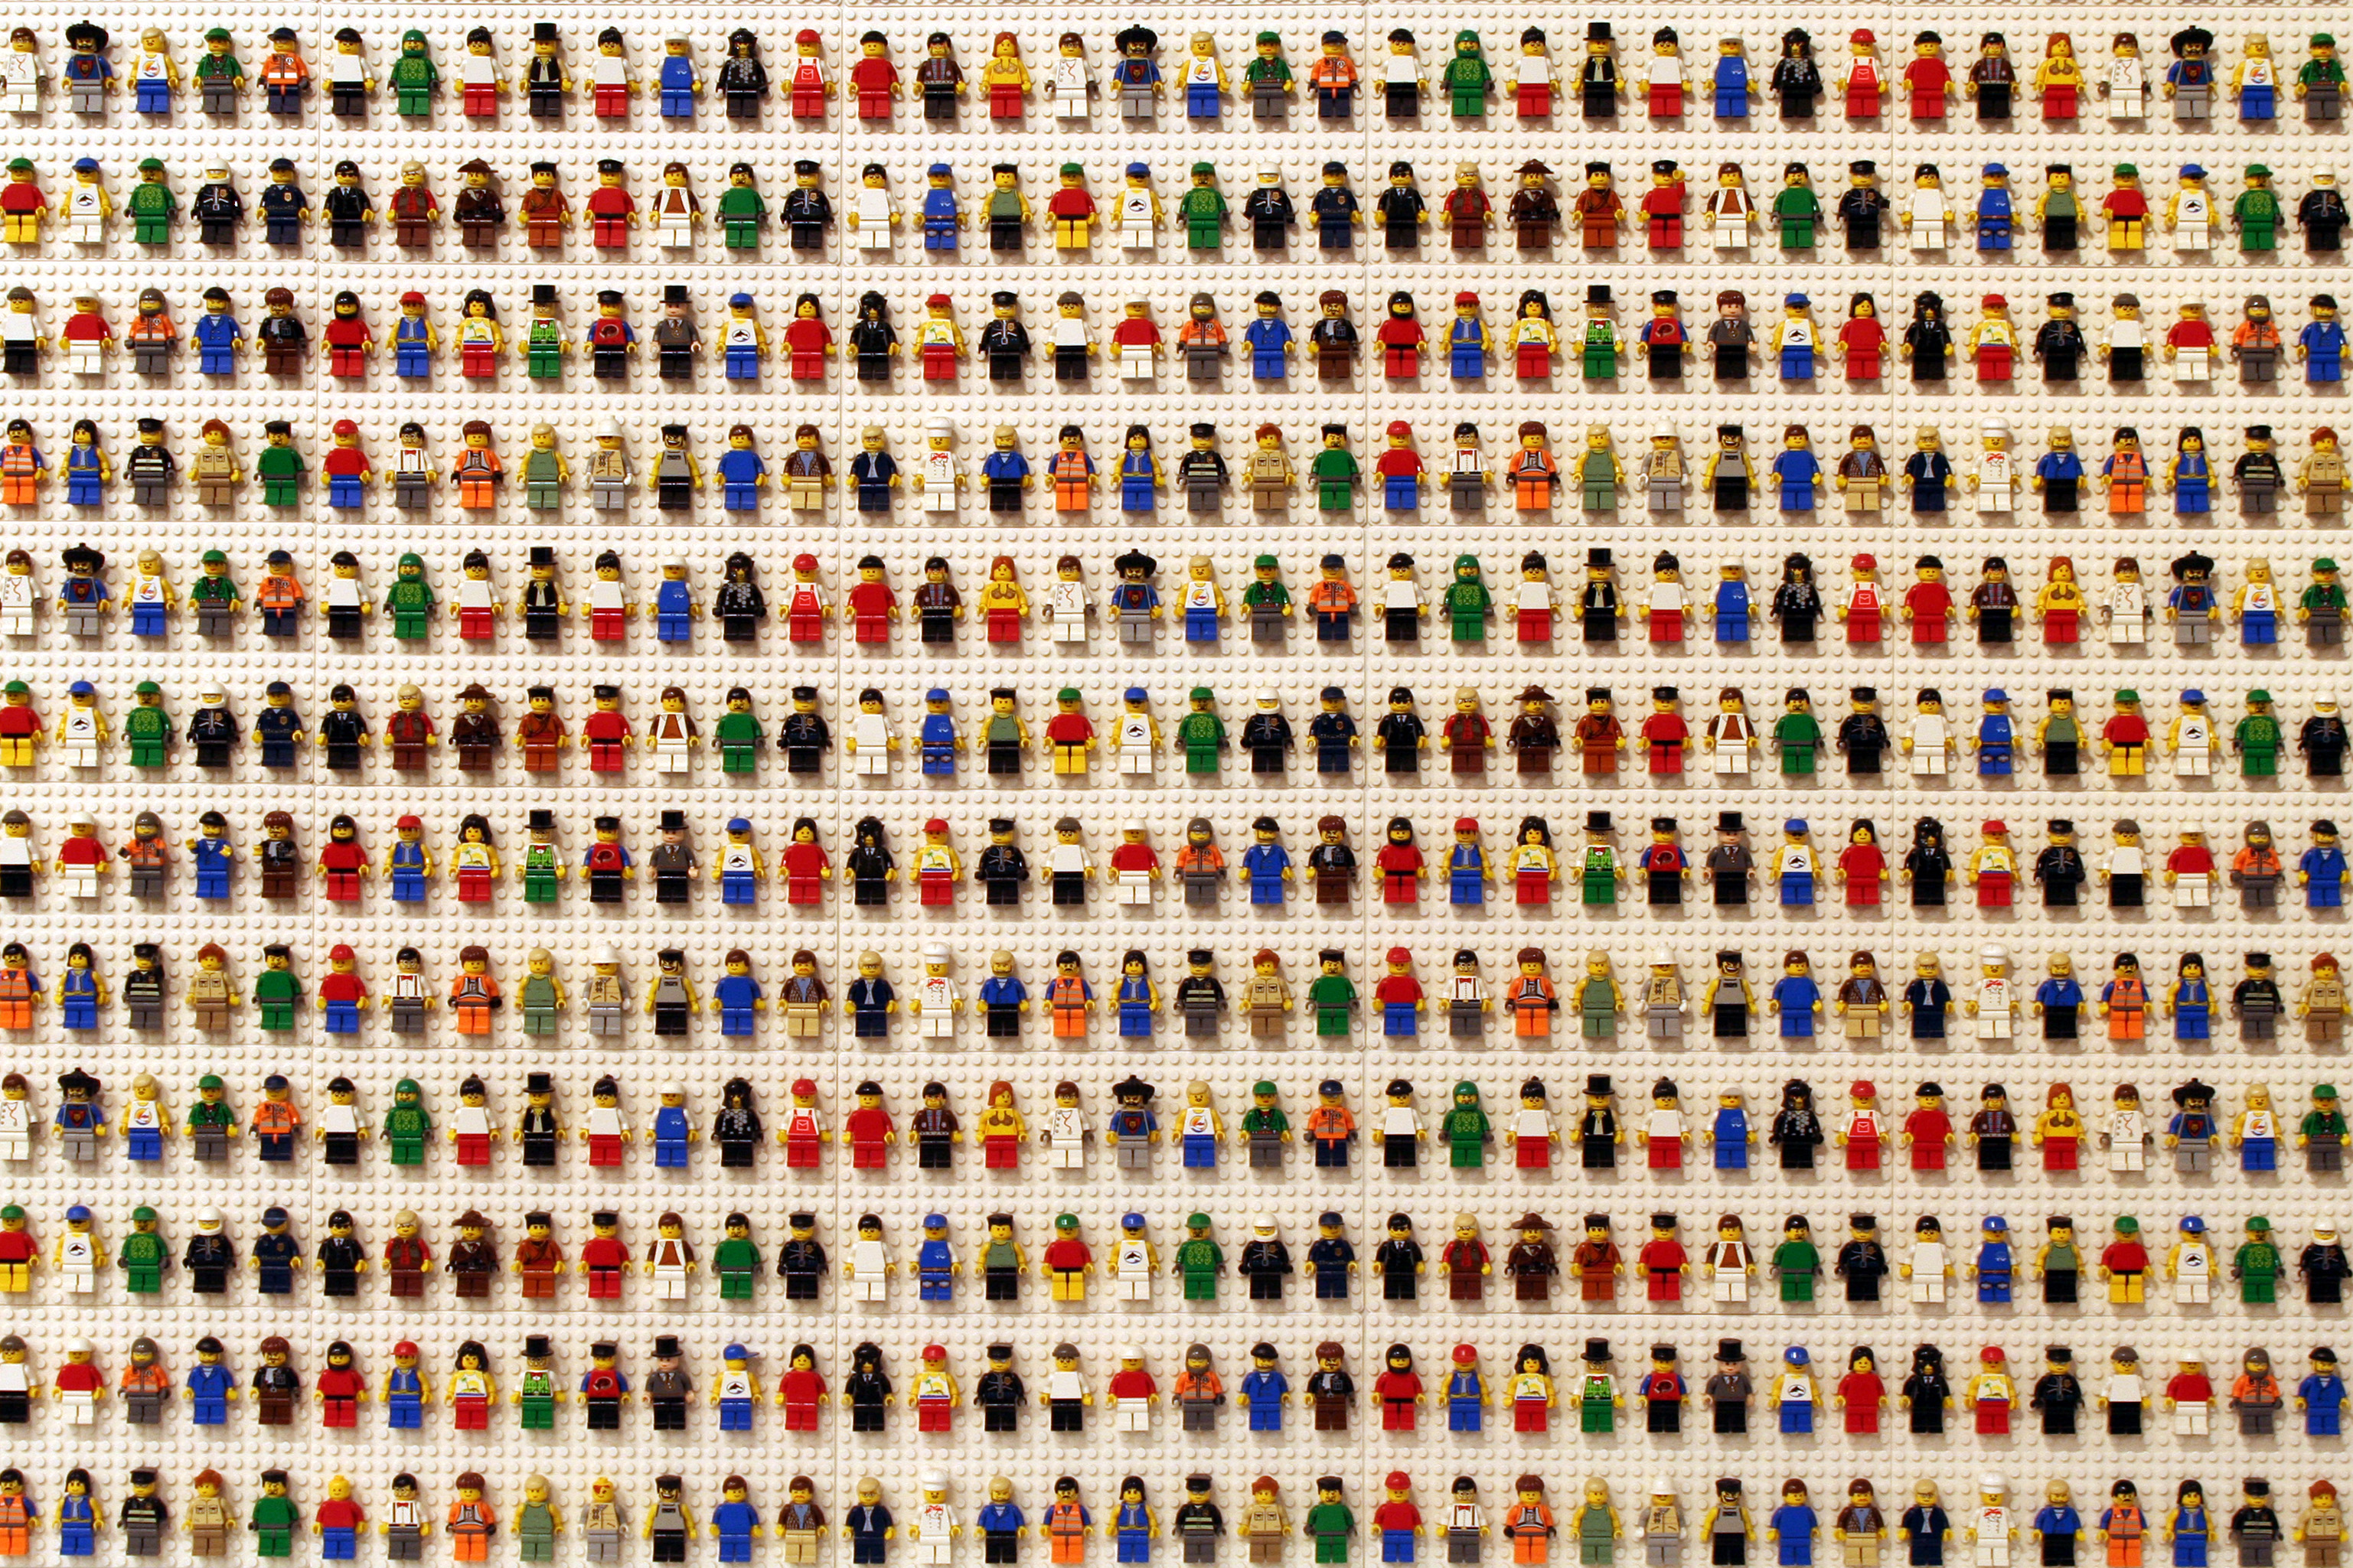 Lego Computer Wallpapers Desktop Backgrounds 3074x2049 ID293277 3074x2049